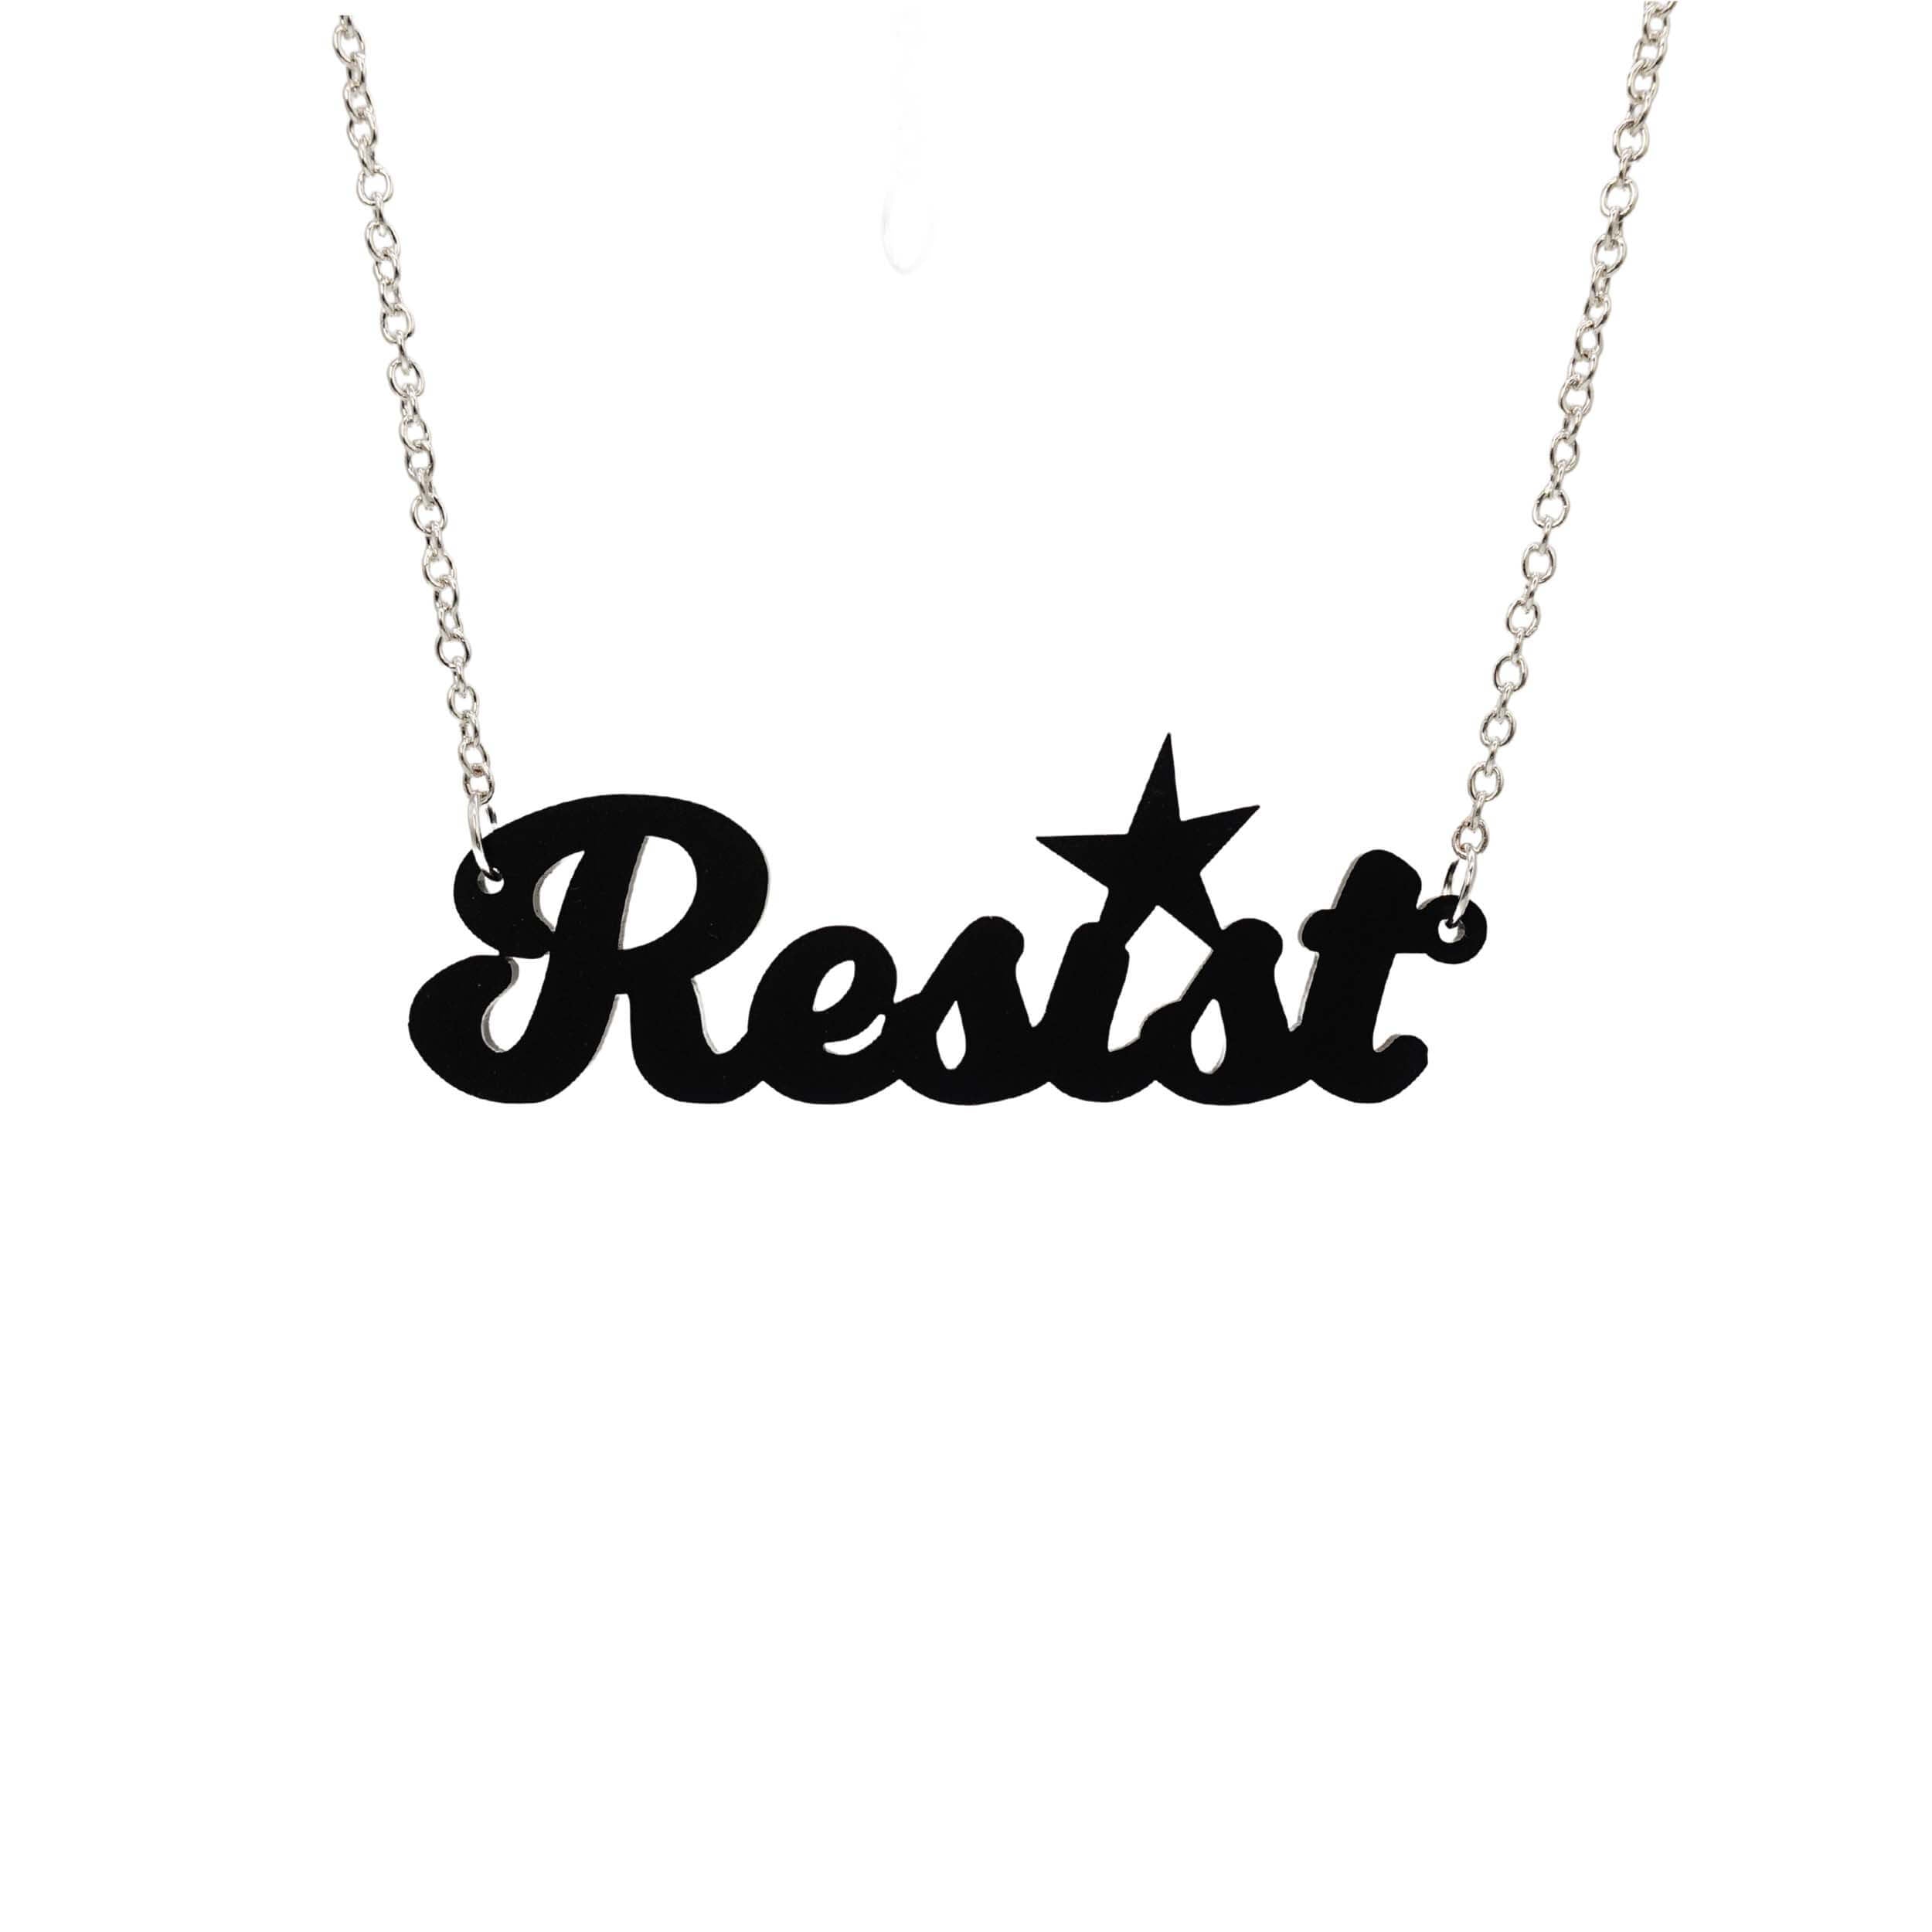 Matte black script Resist necklace shown hanging against a white background. 